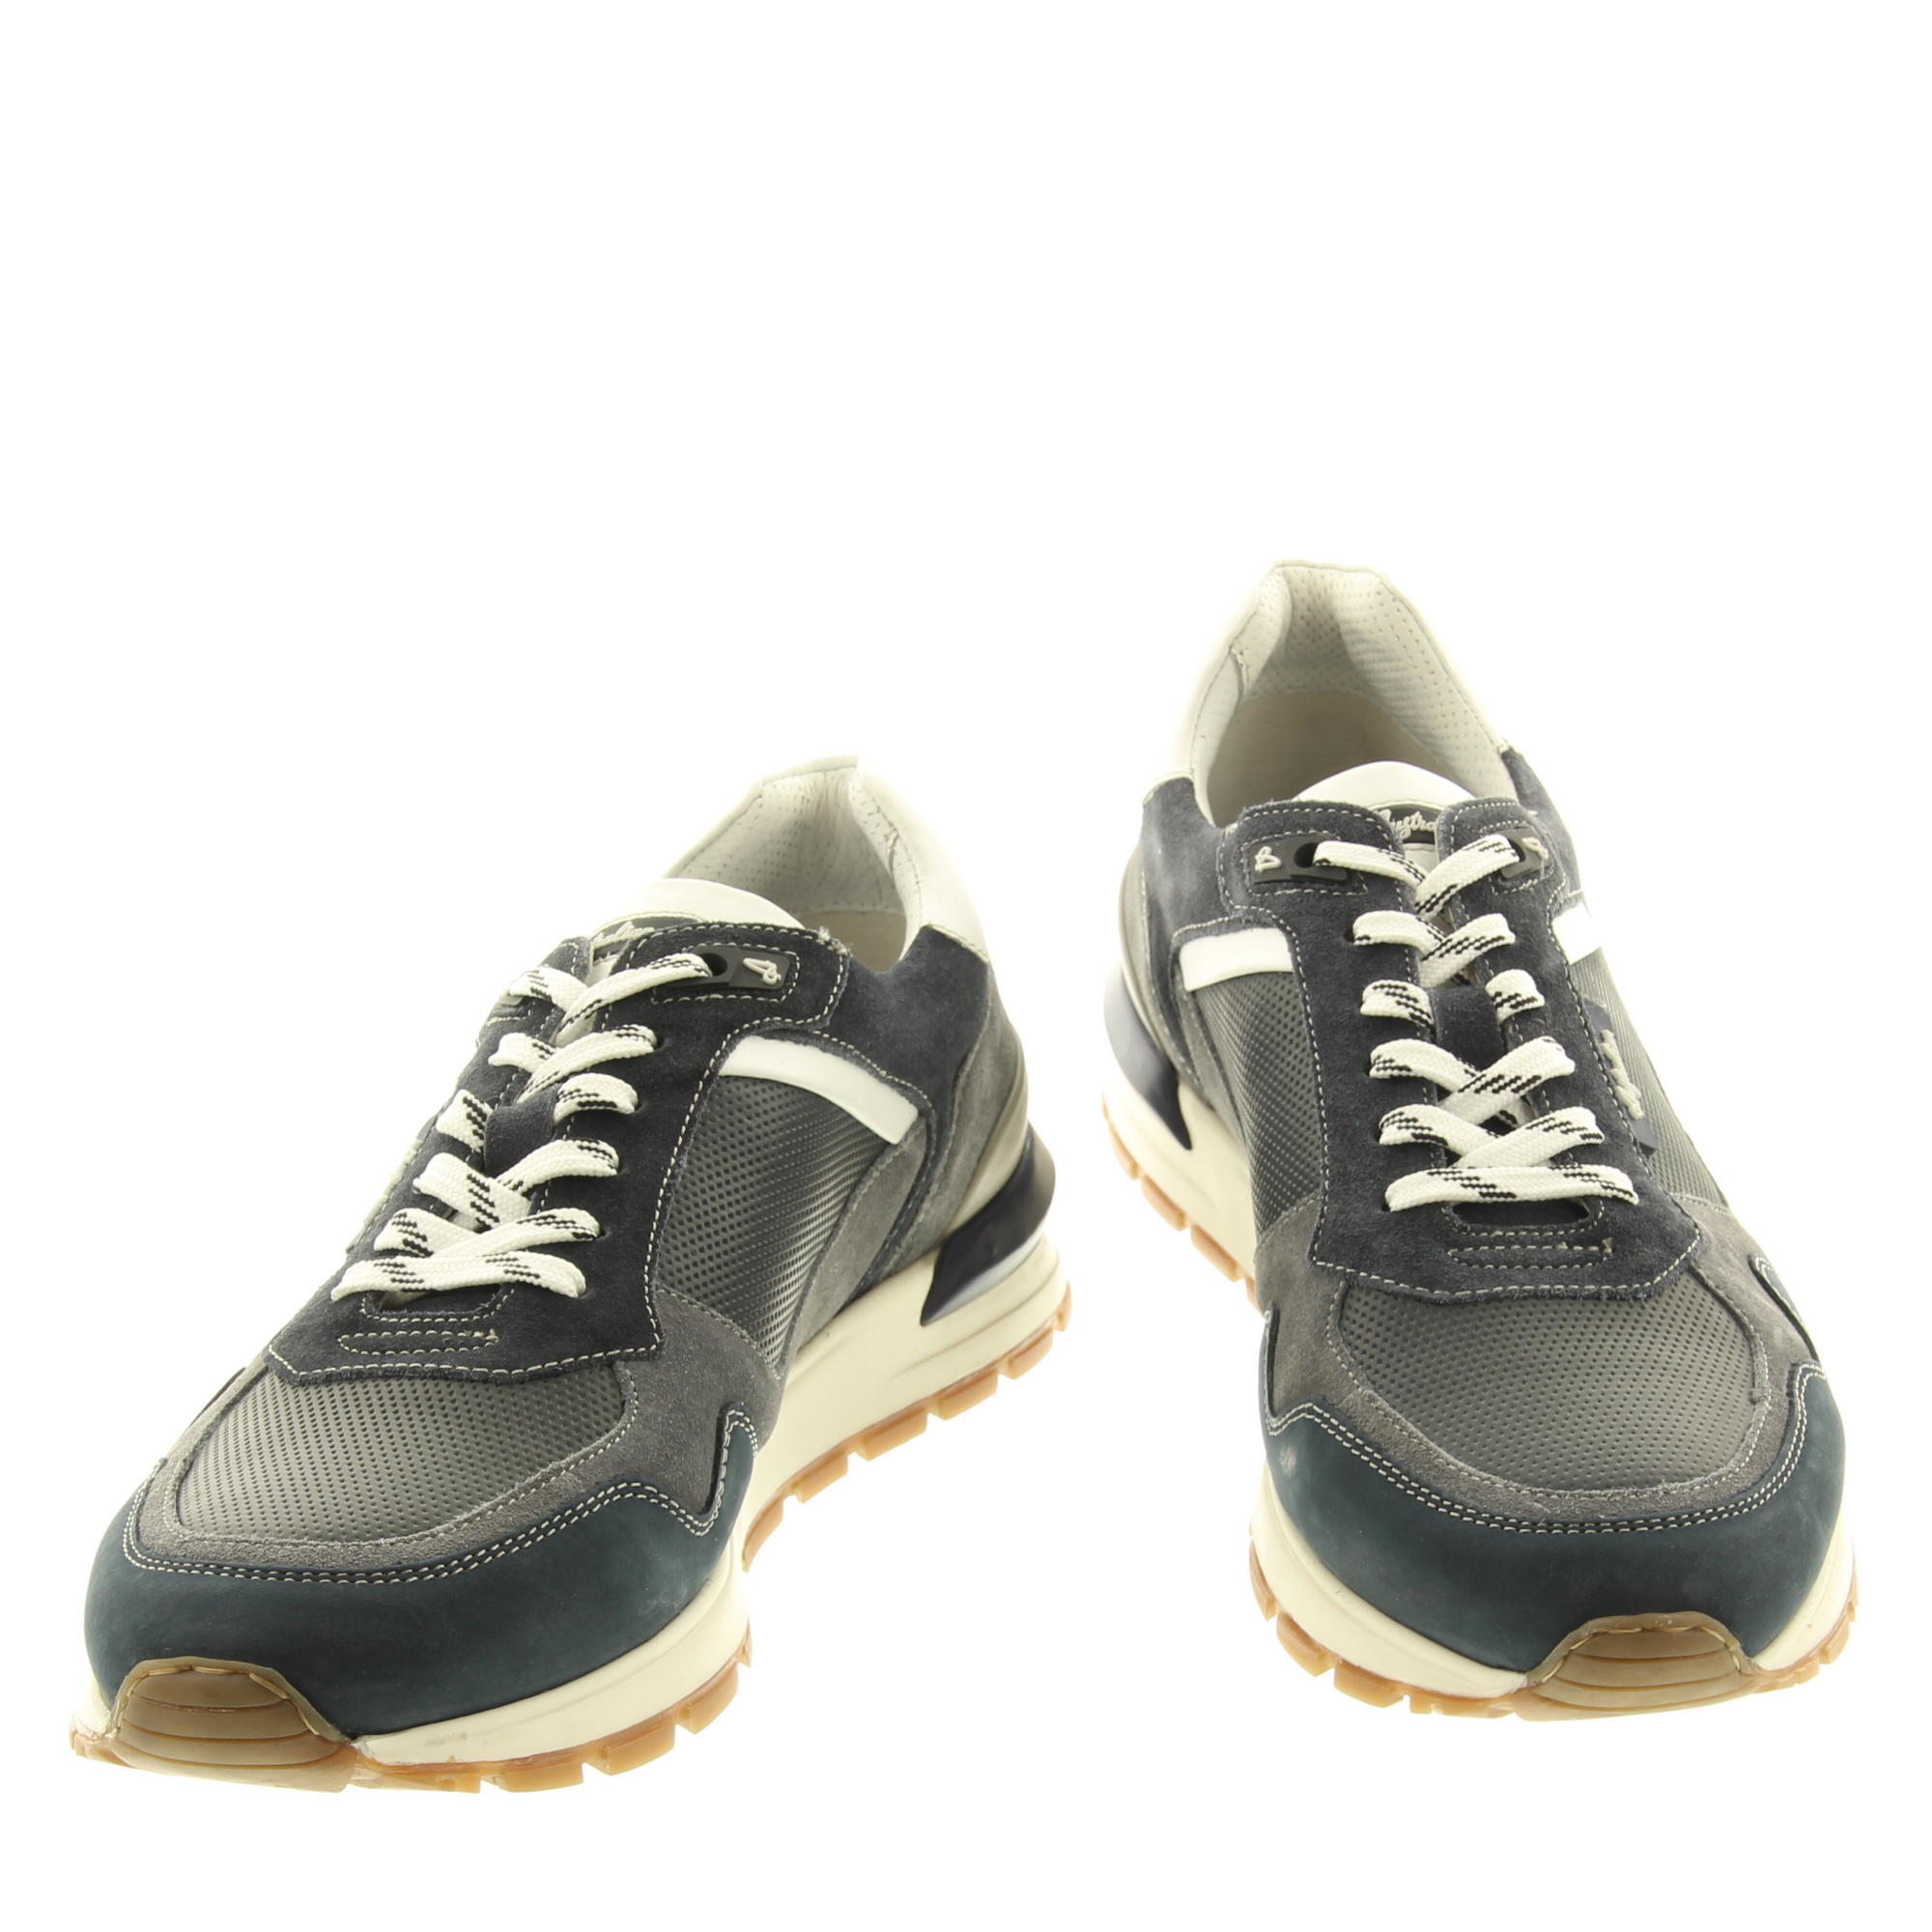 Australian Footwear Novecento 15.1632.02 SI7 Blue-Grey-White